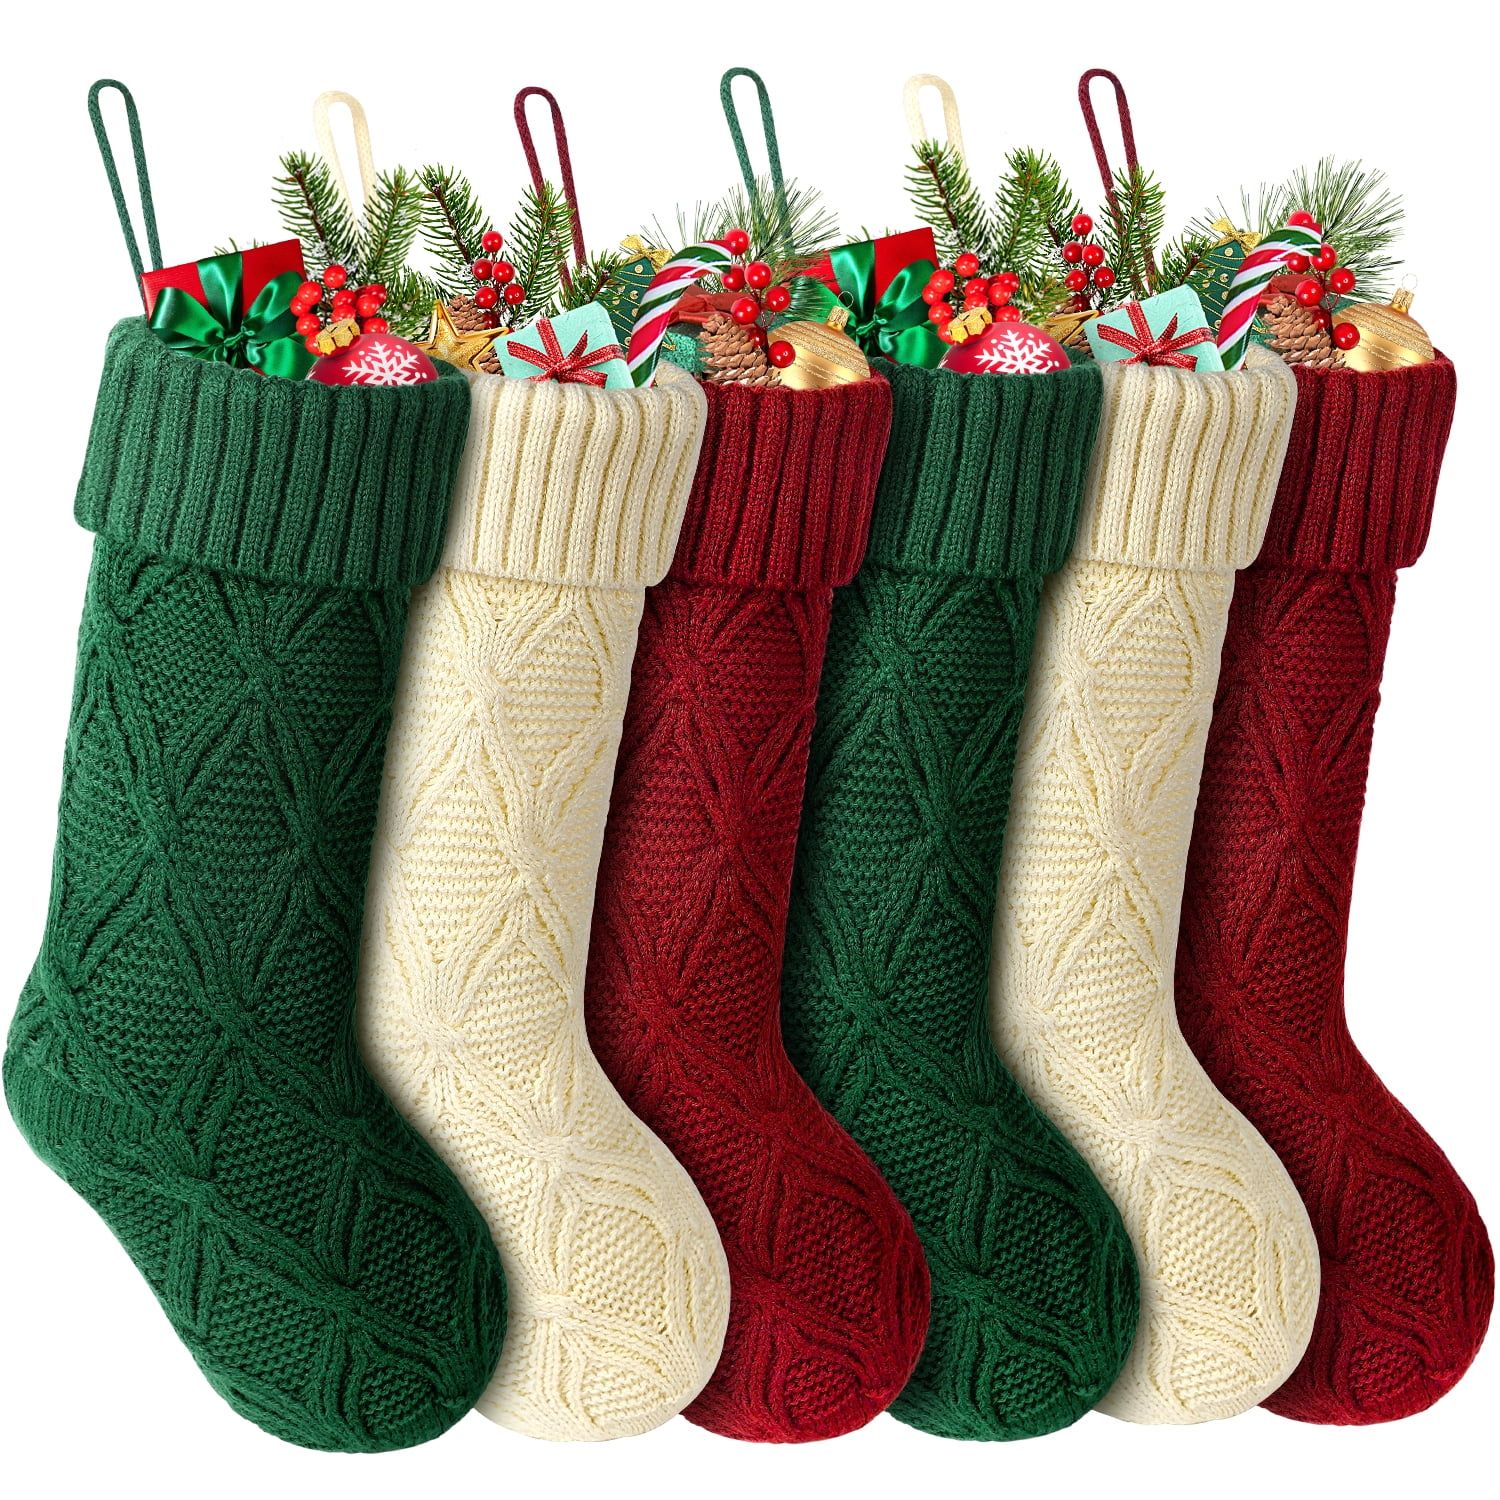 Ayieyill 6 Pcs Christmas Stockings Knitted Xmas Stockings Double-Sided 18 Inches Fireplace Stocki... | Walmart (US)